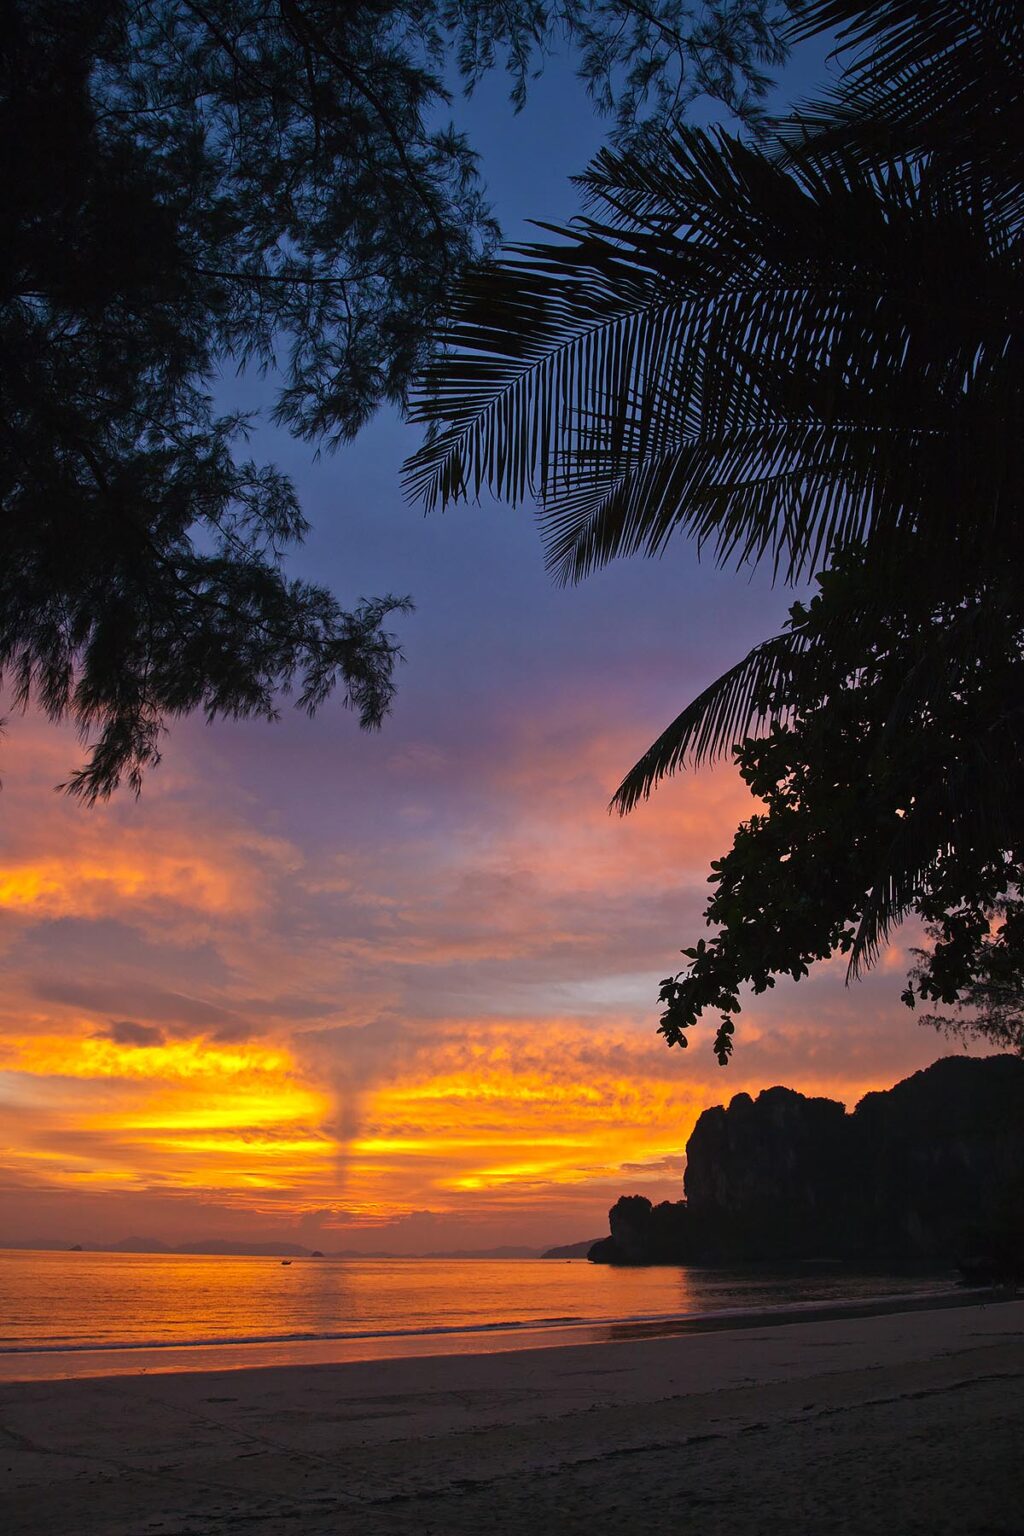 SUNSET at KRABI BEACH - THAILAND